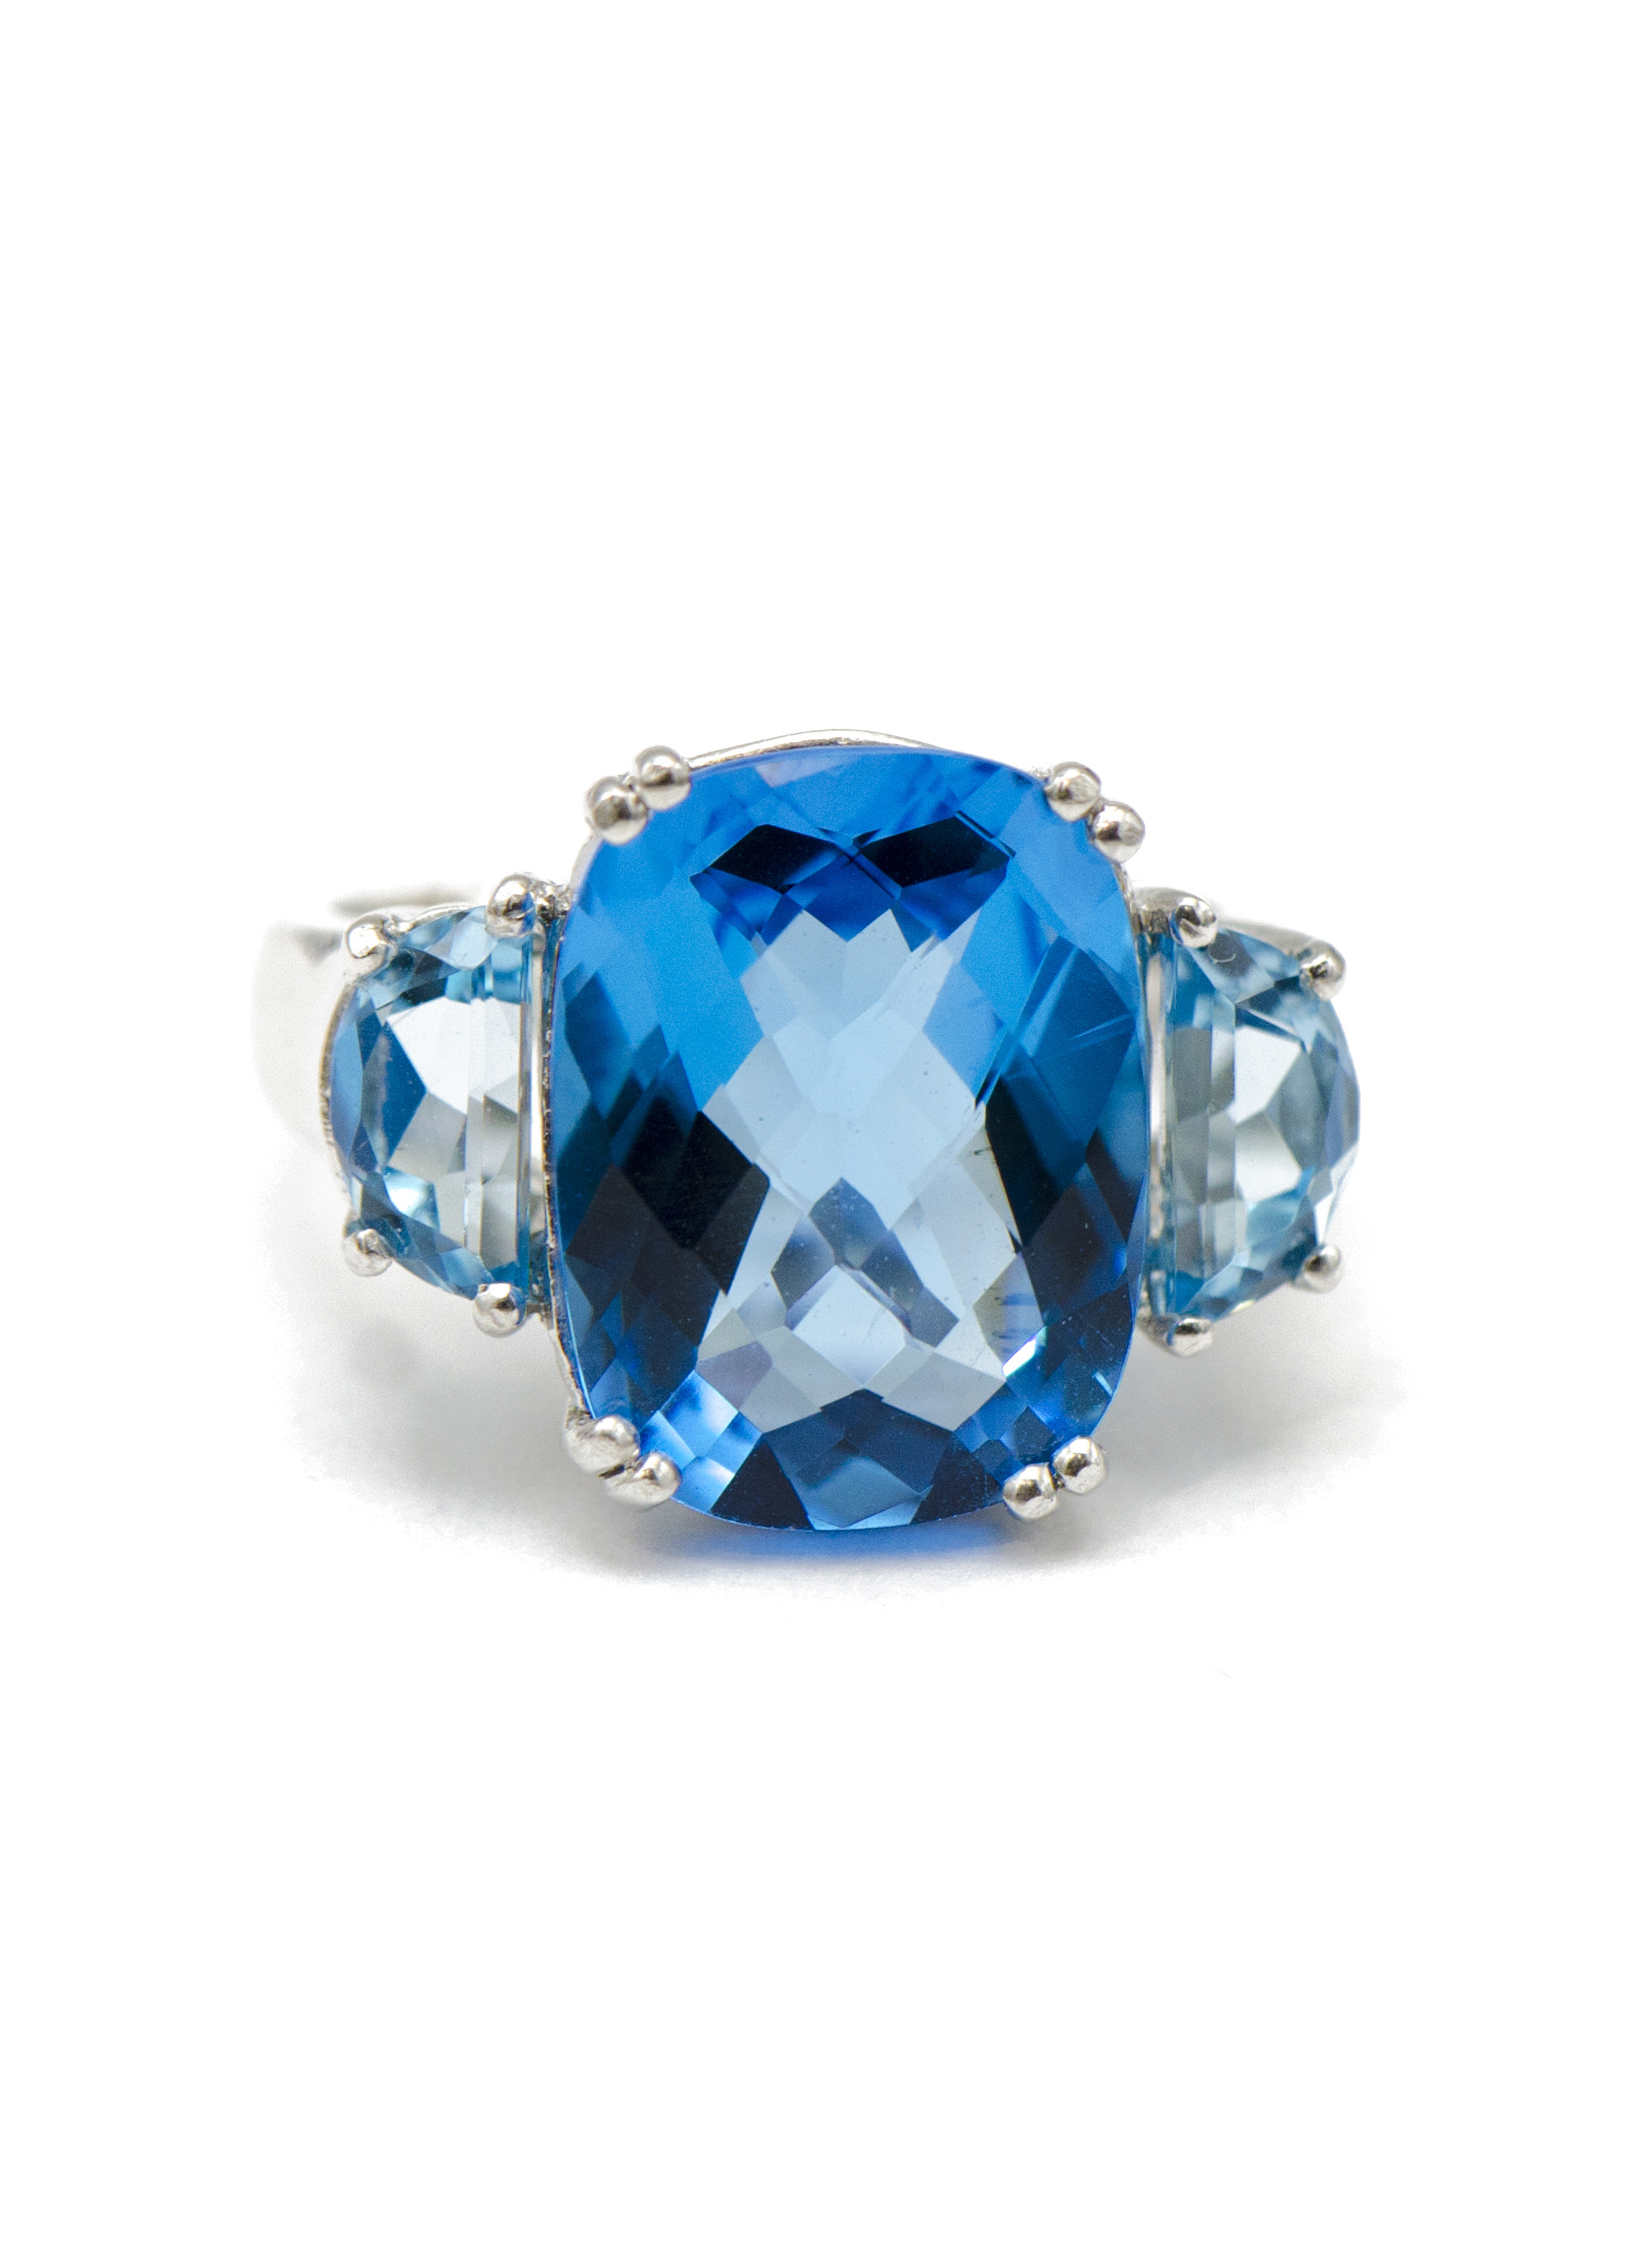 Blue topaz cocktail ring, Sandlers diamonds, Columbia SC, Mount Pleasant, 2000x2760 HD Handy